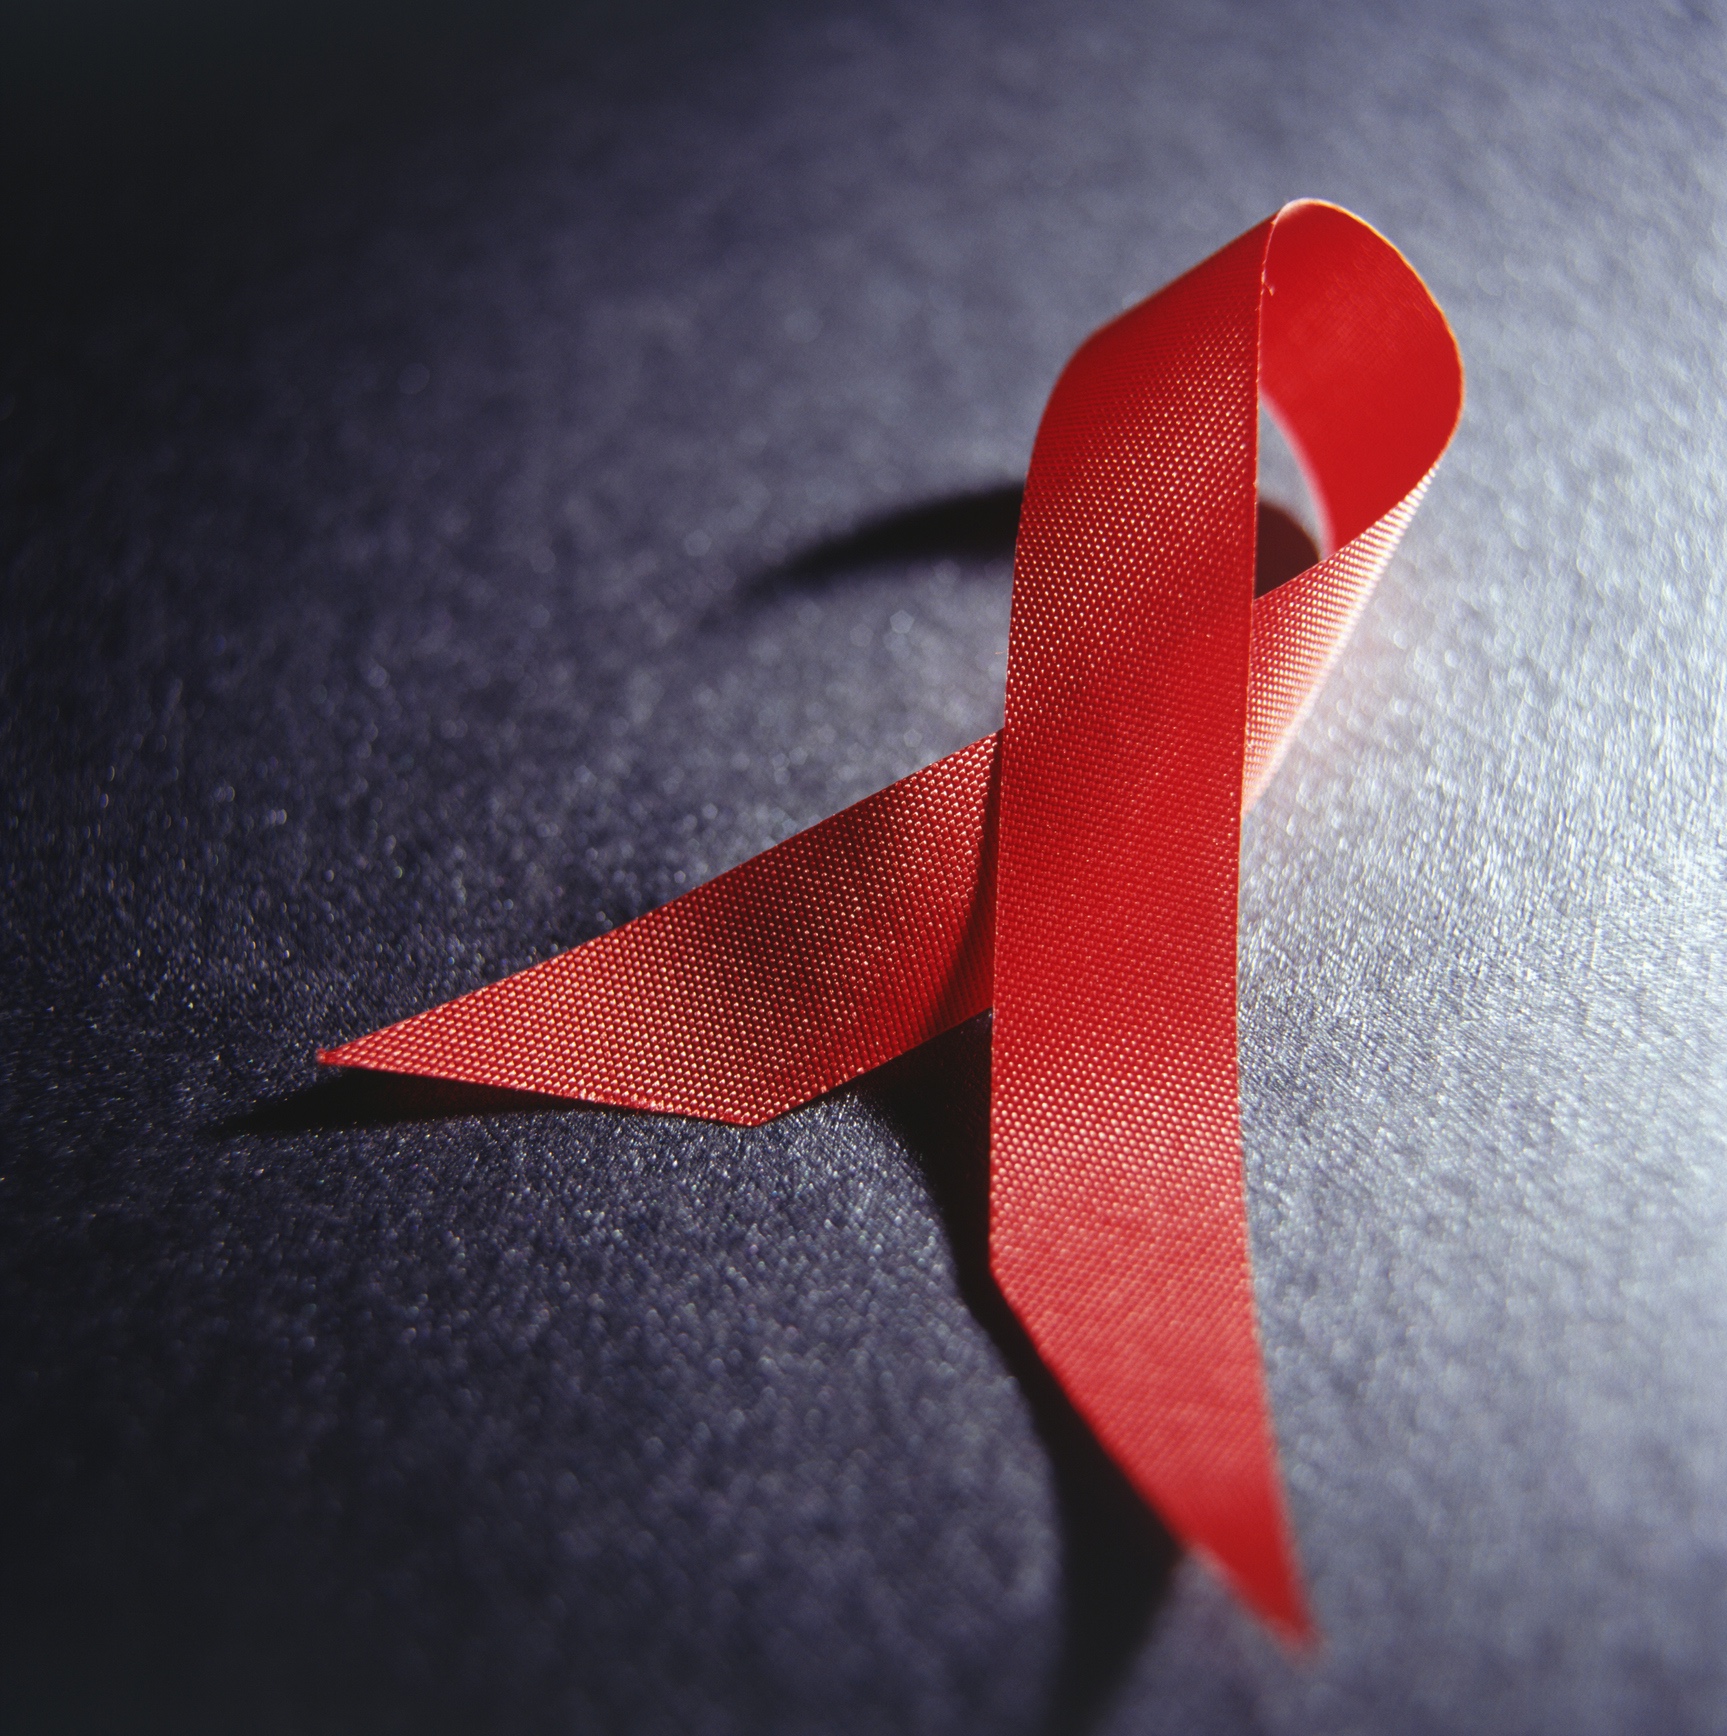 AIDS Awareness to Combat the Myths